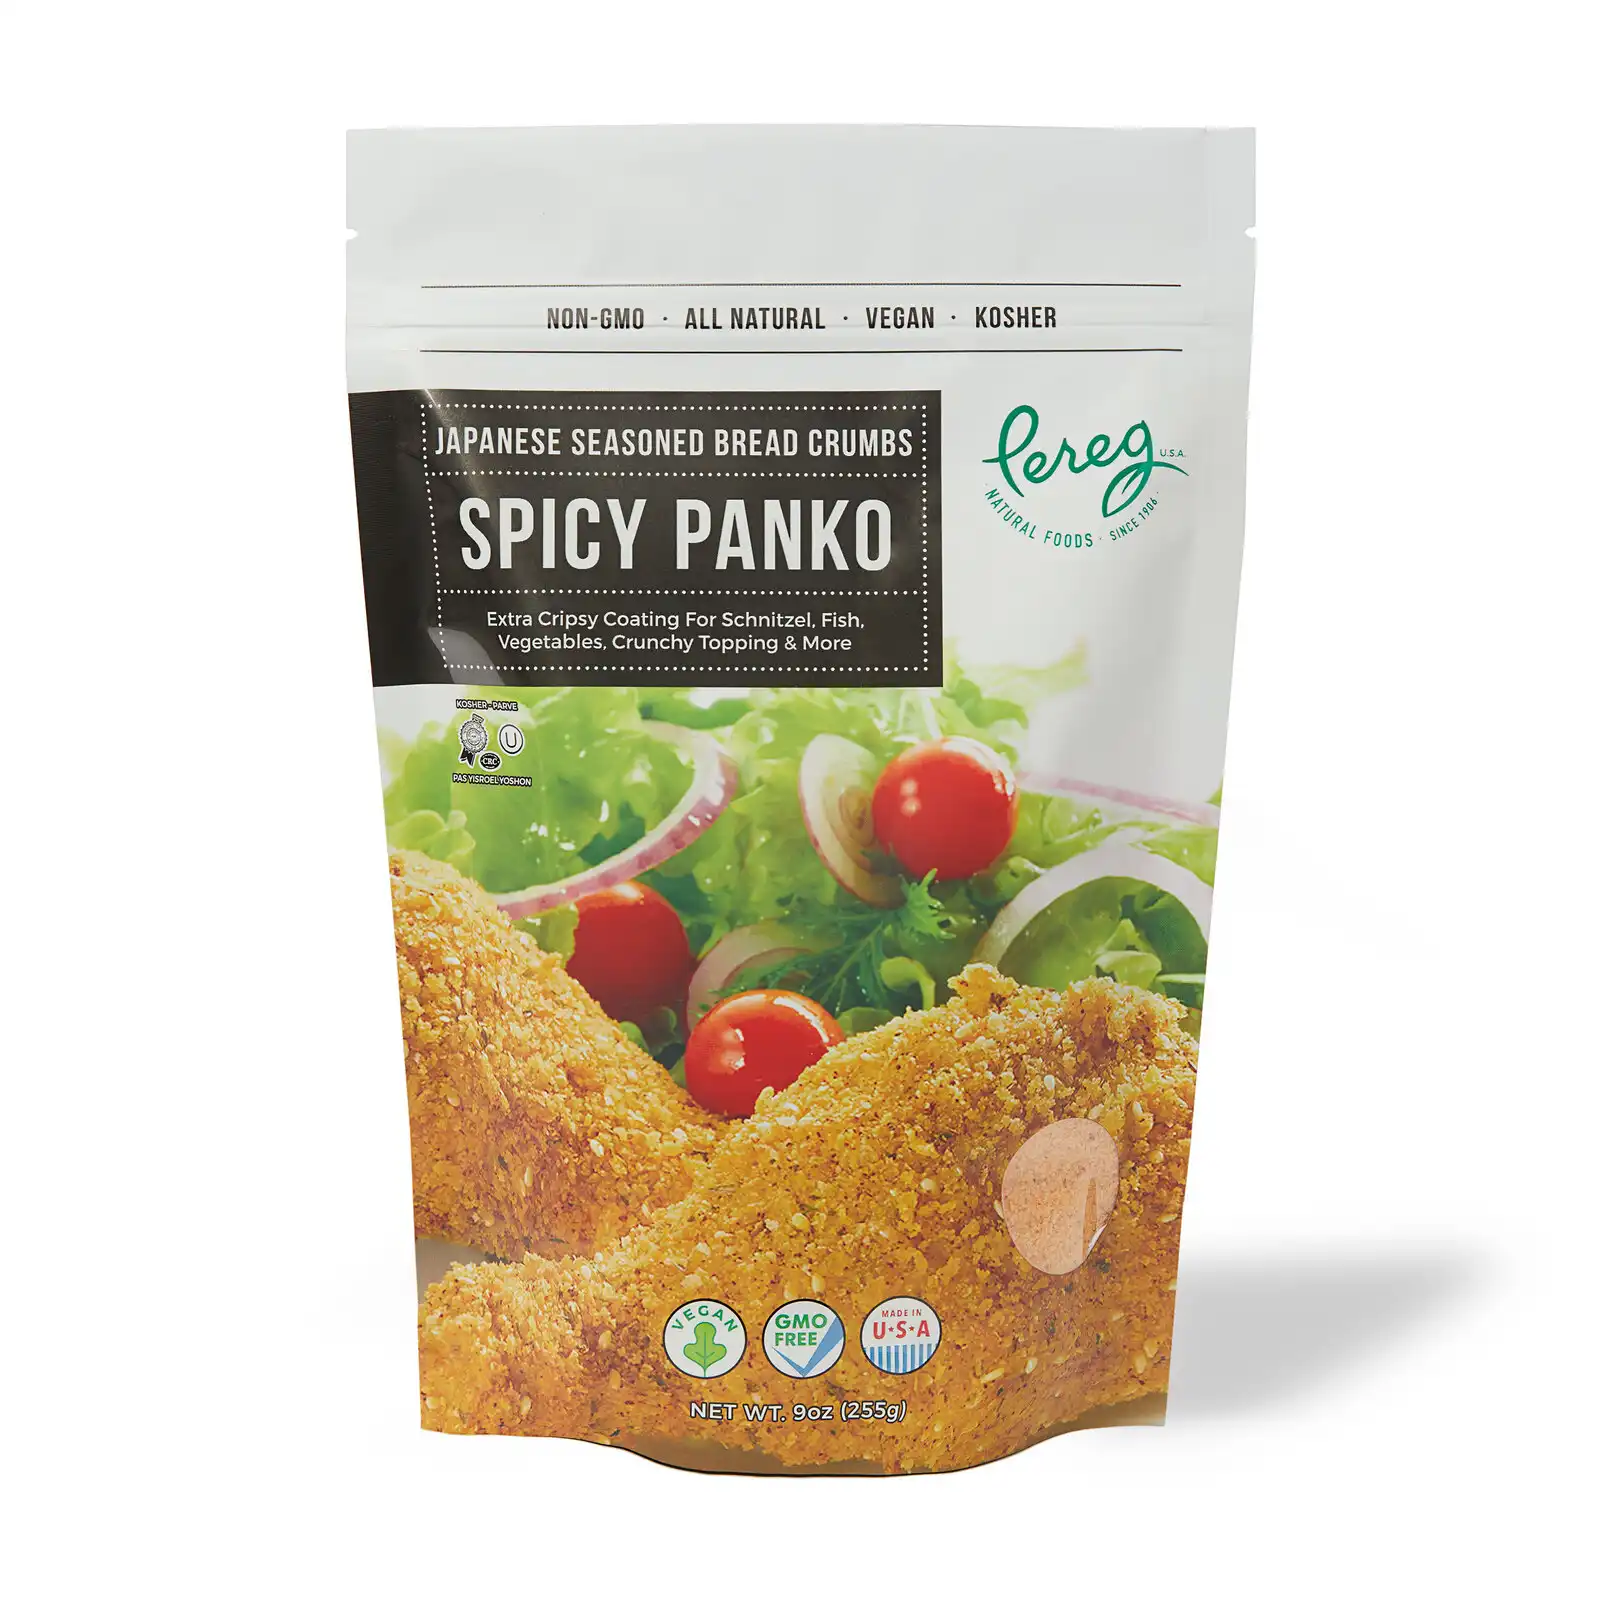 Pereg Japanese Spicy Panko Crumbs 255g